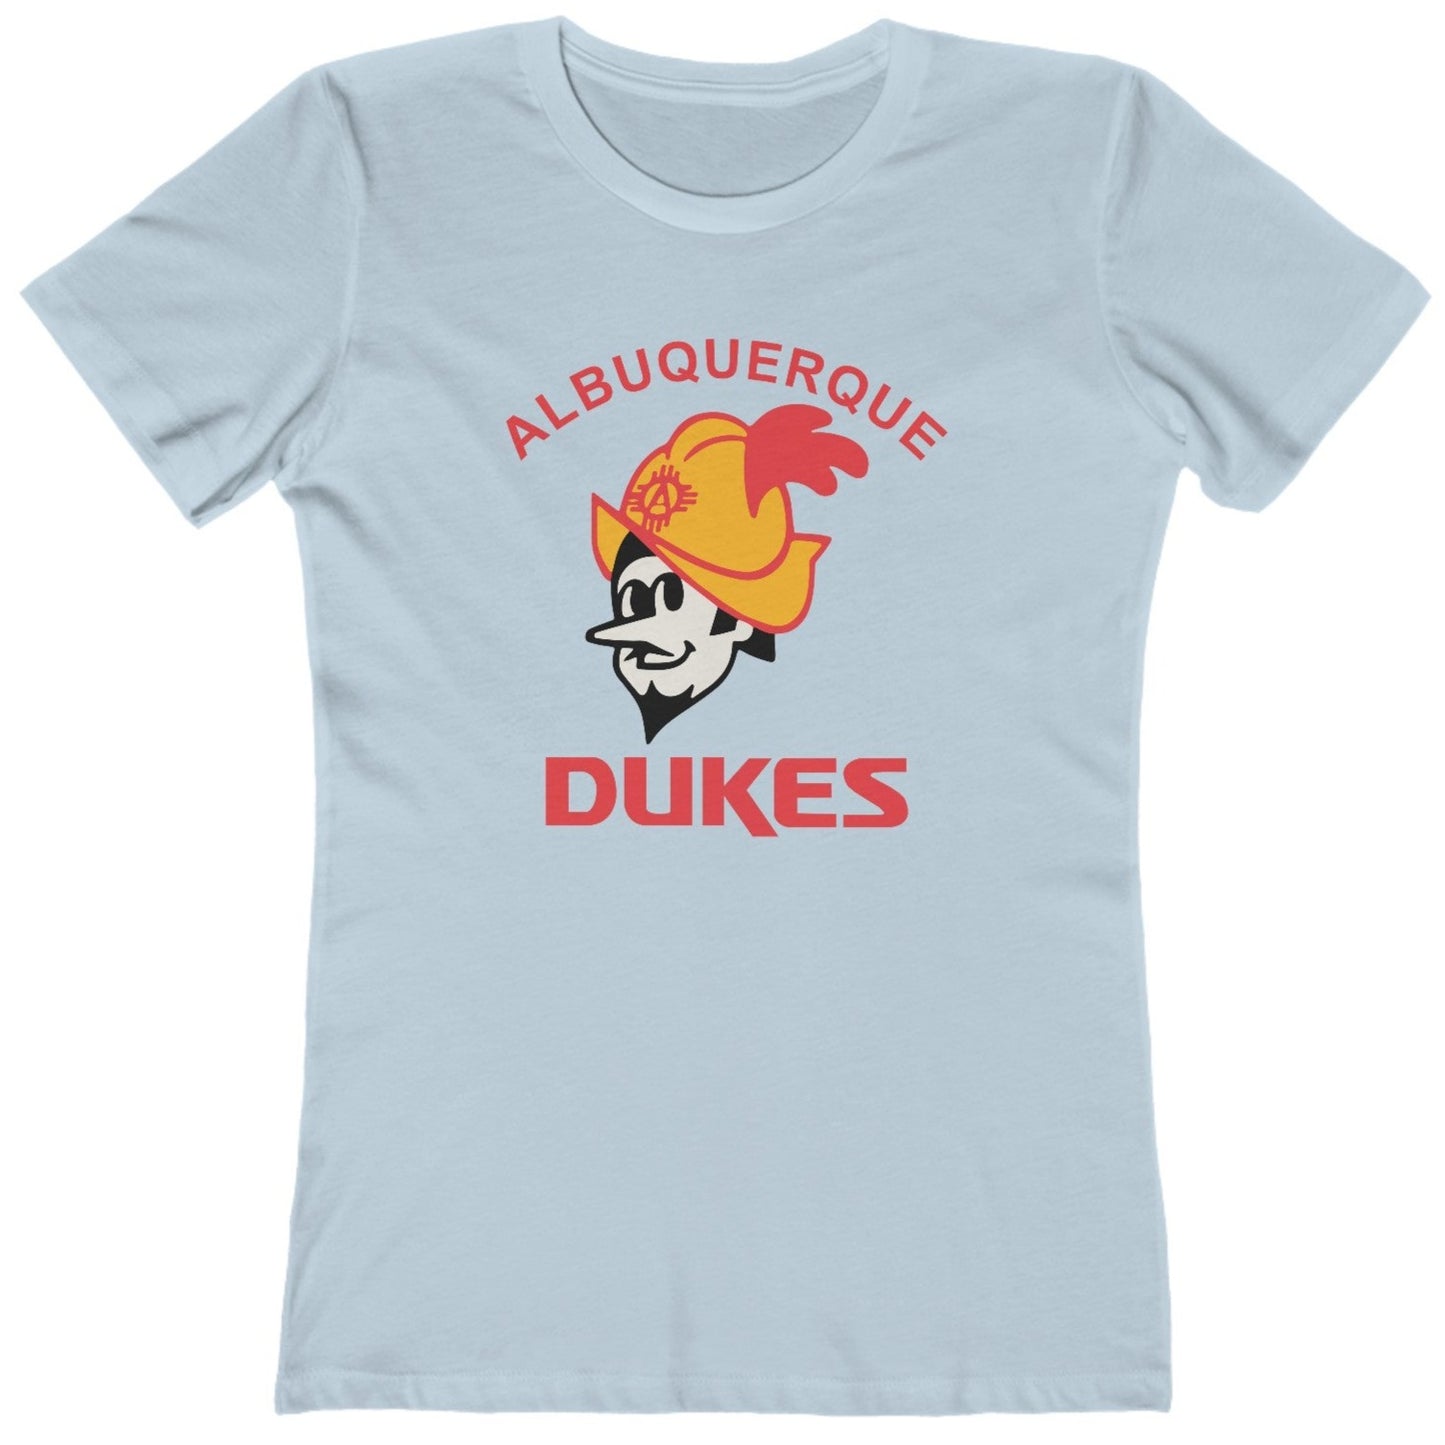 Albuquerque Dukes minor league baseball t shirt